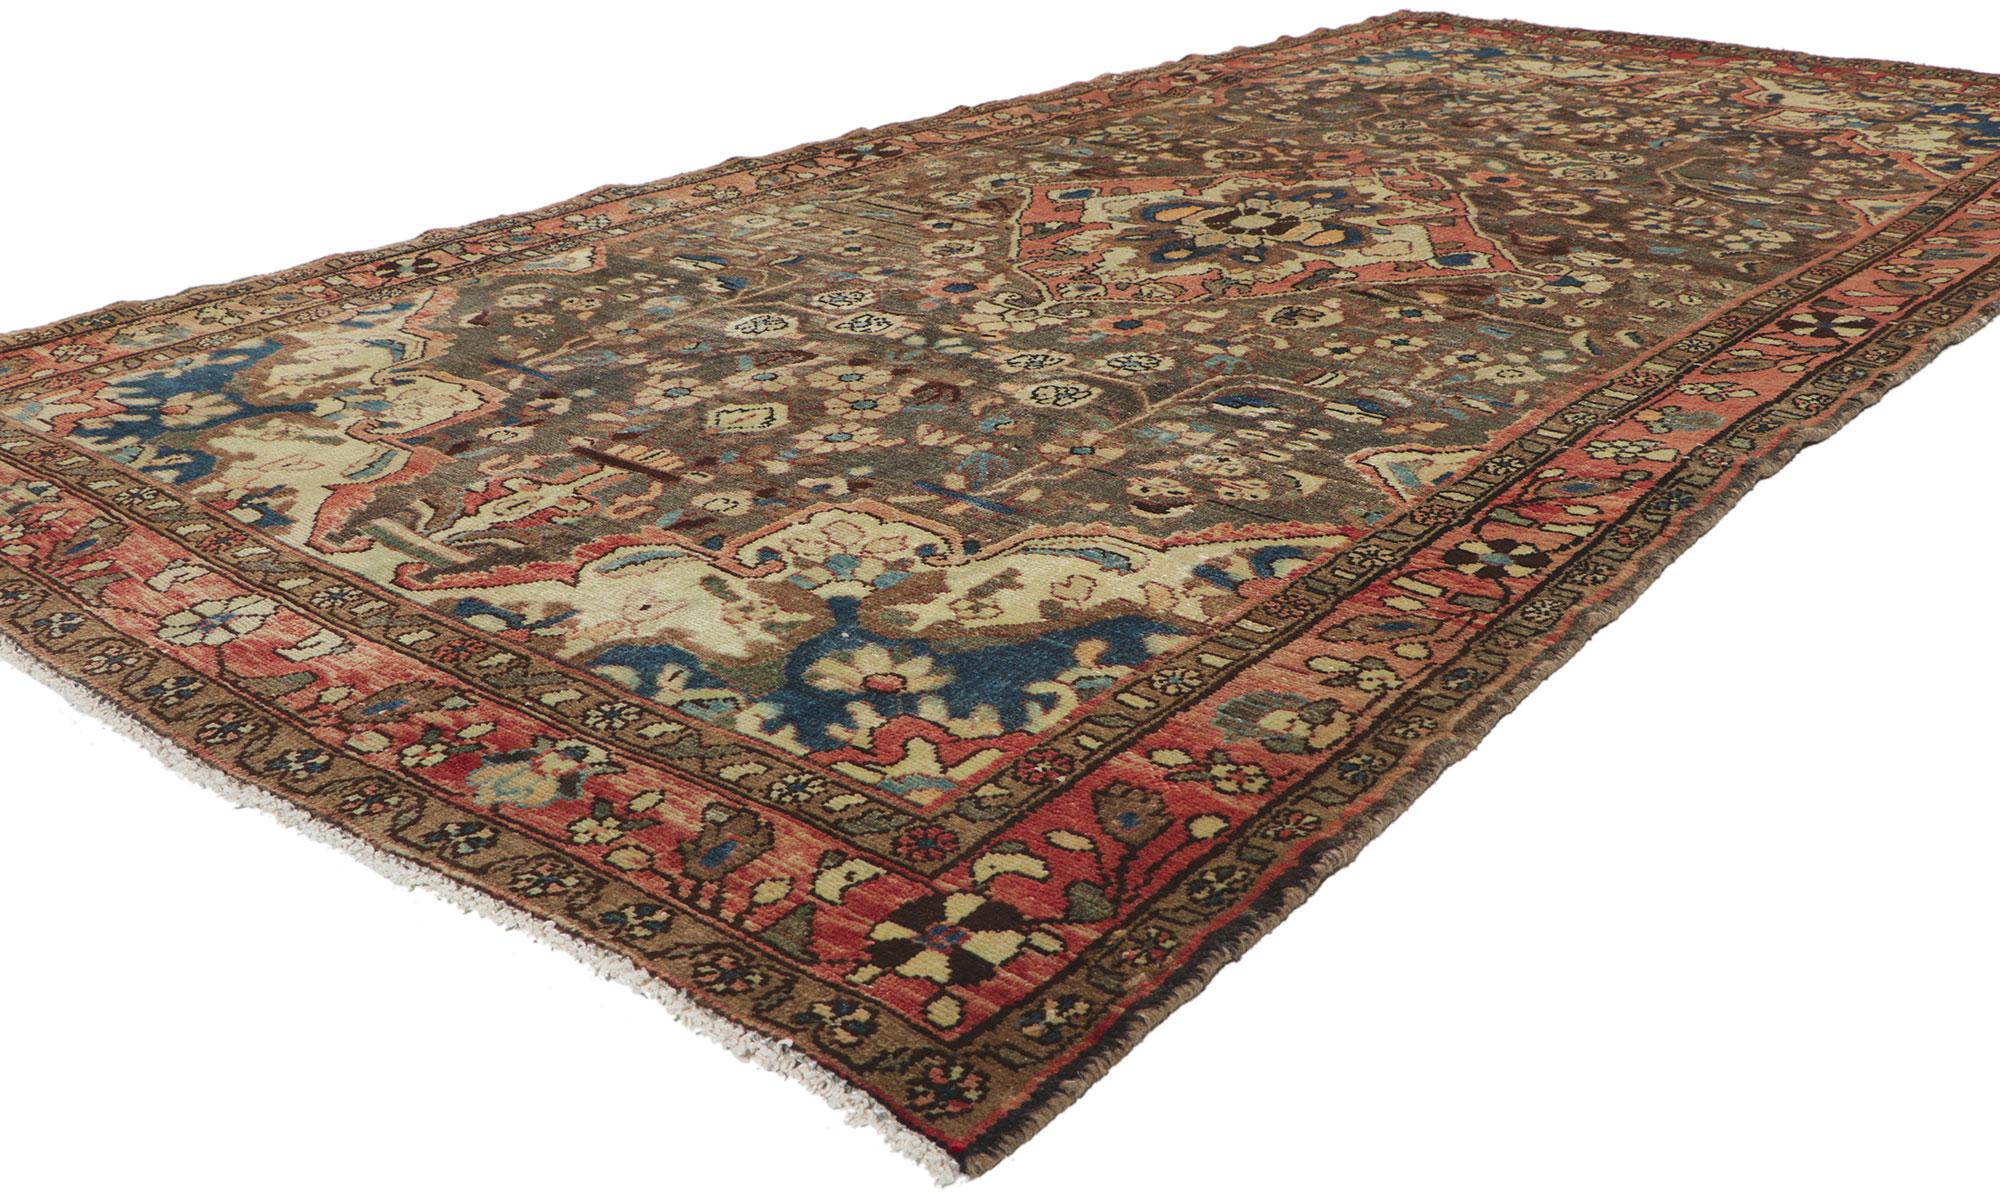 61106 Vintage Persian Hamadan rug, 05'00 x 09'06.